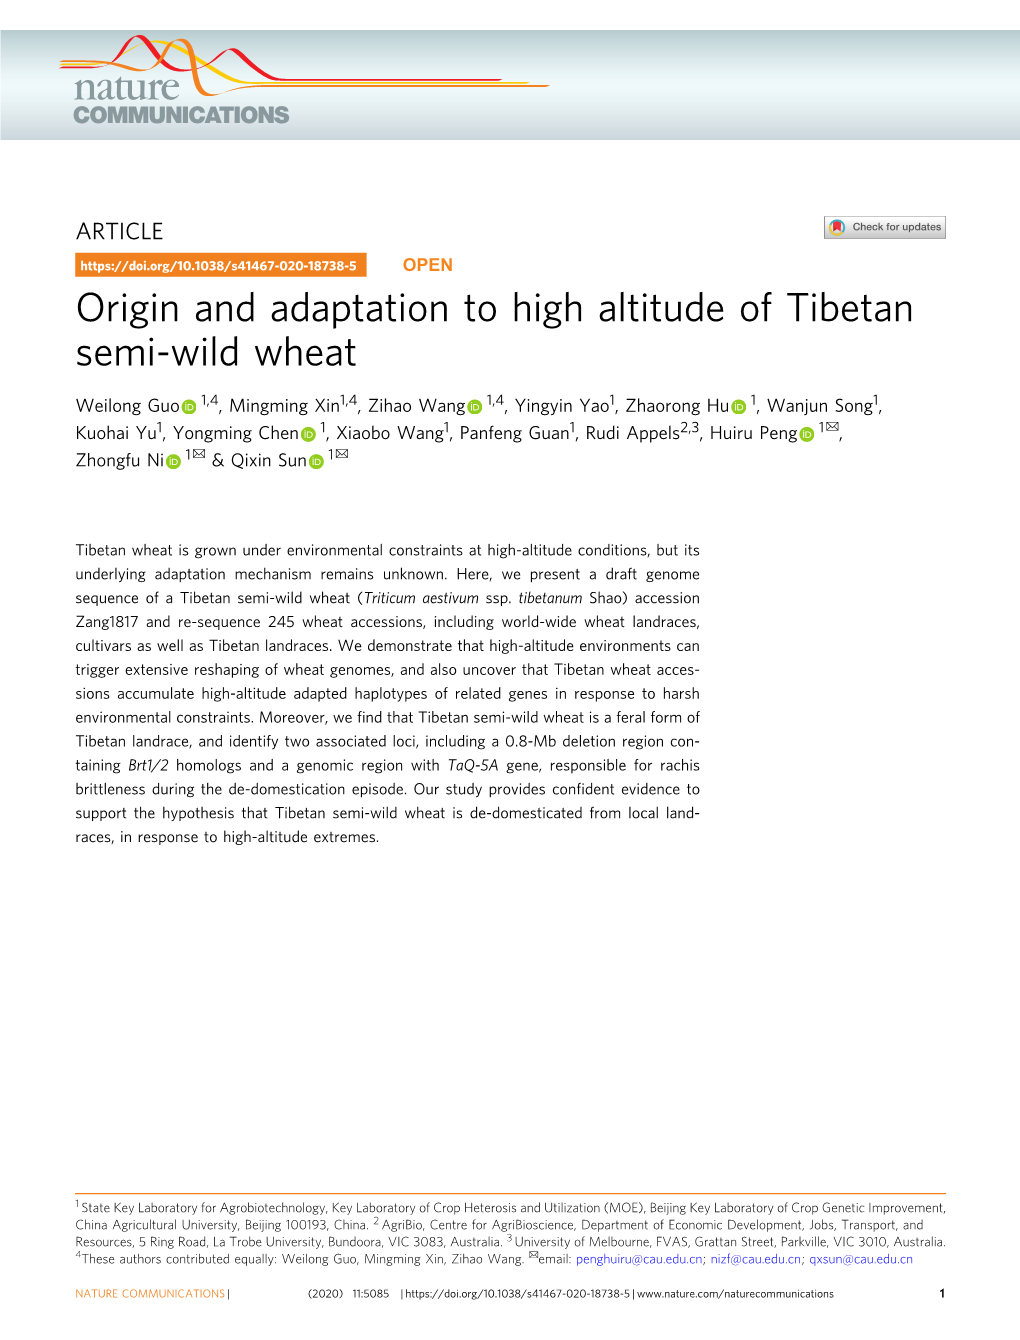 Origin and Adaptation to High Altitude of Tibetan Semi-Wild Wheat